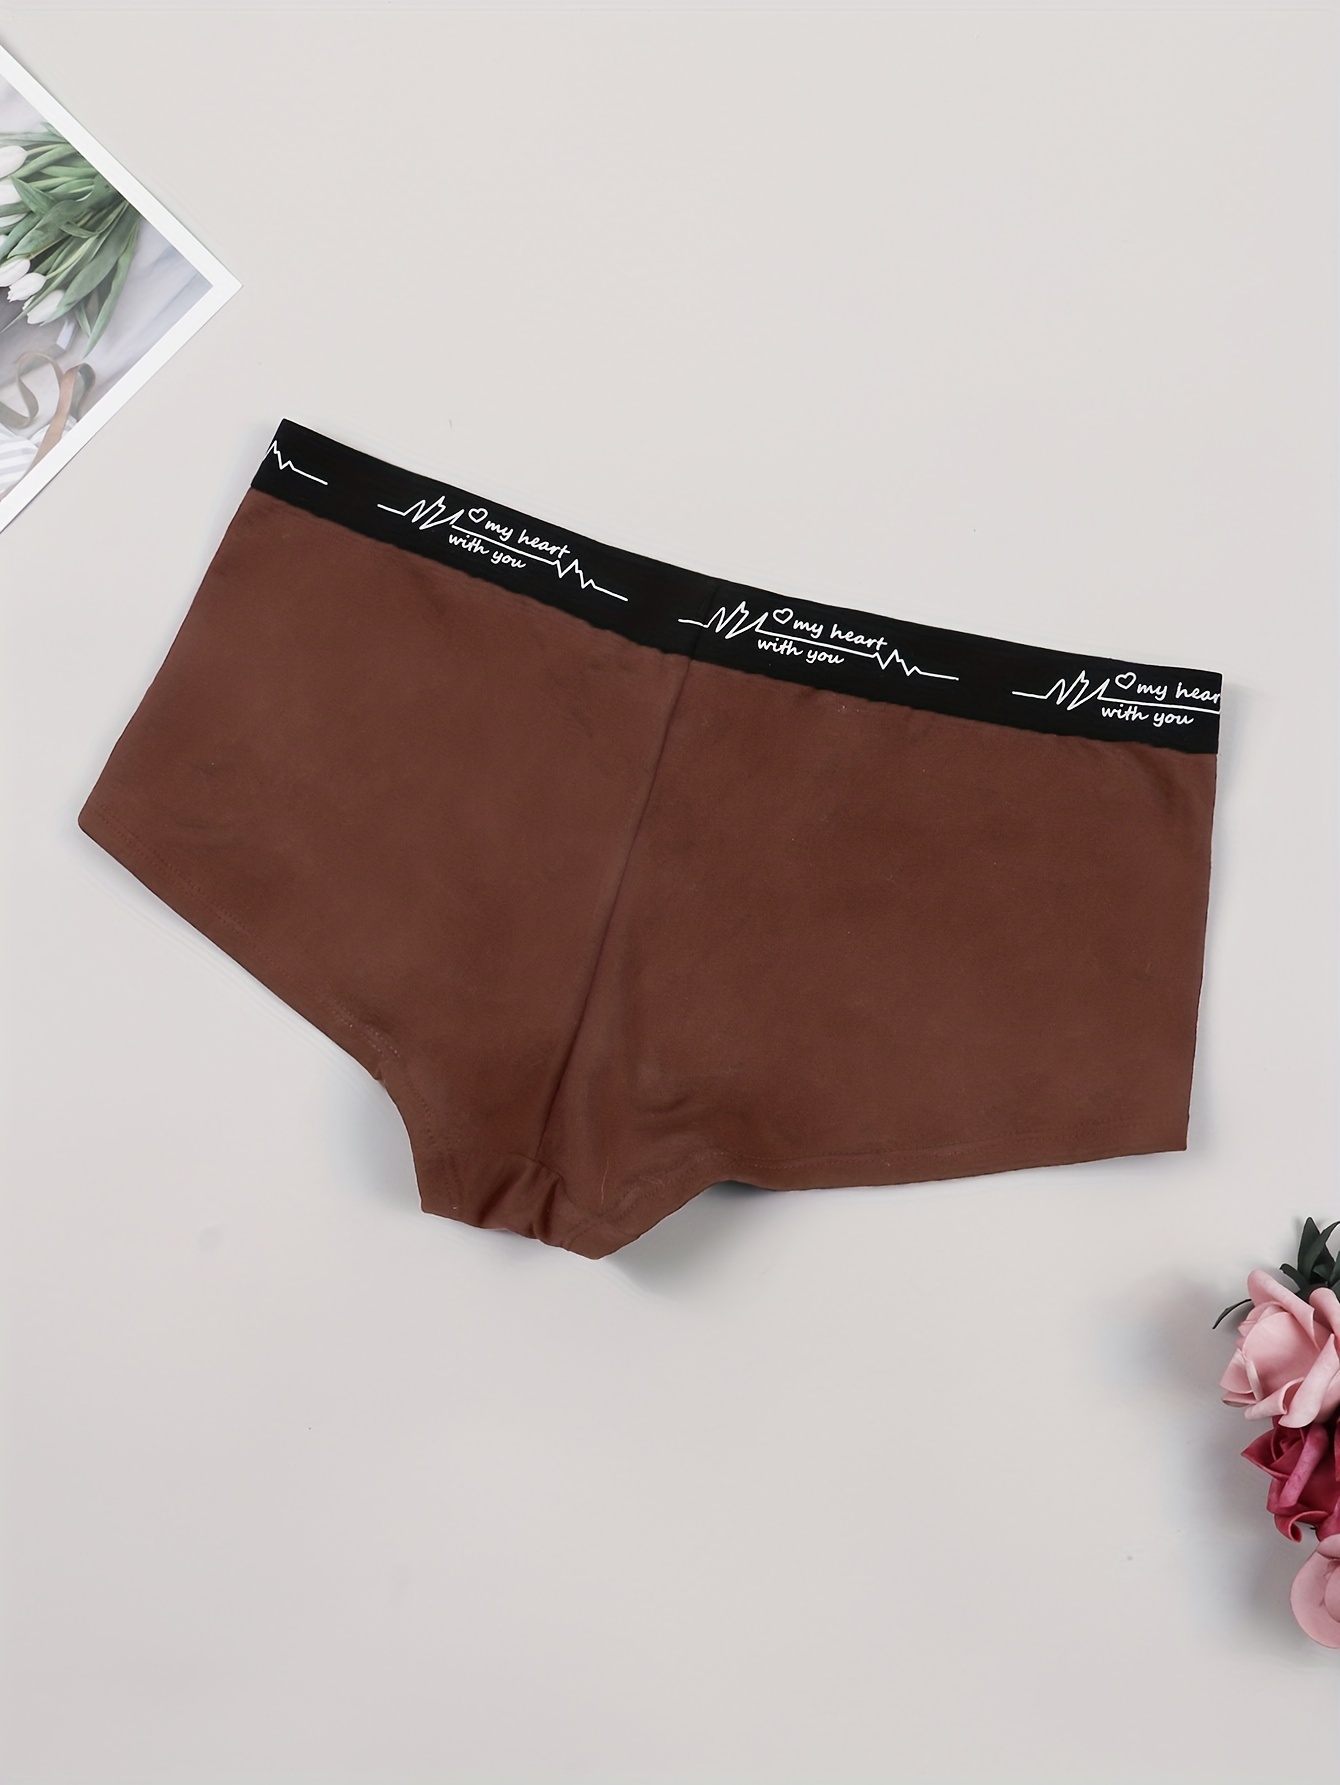 Soft boy shorts panties for men For Comfort 